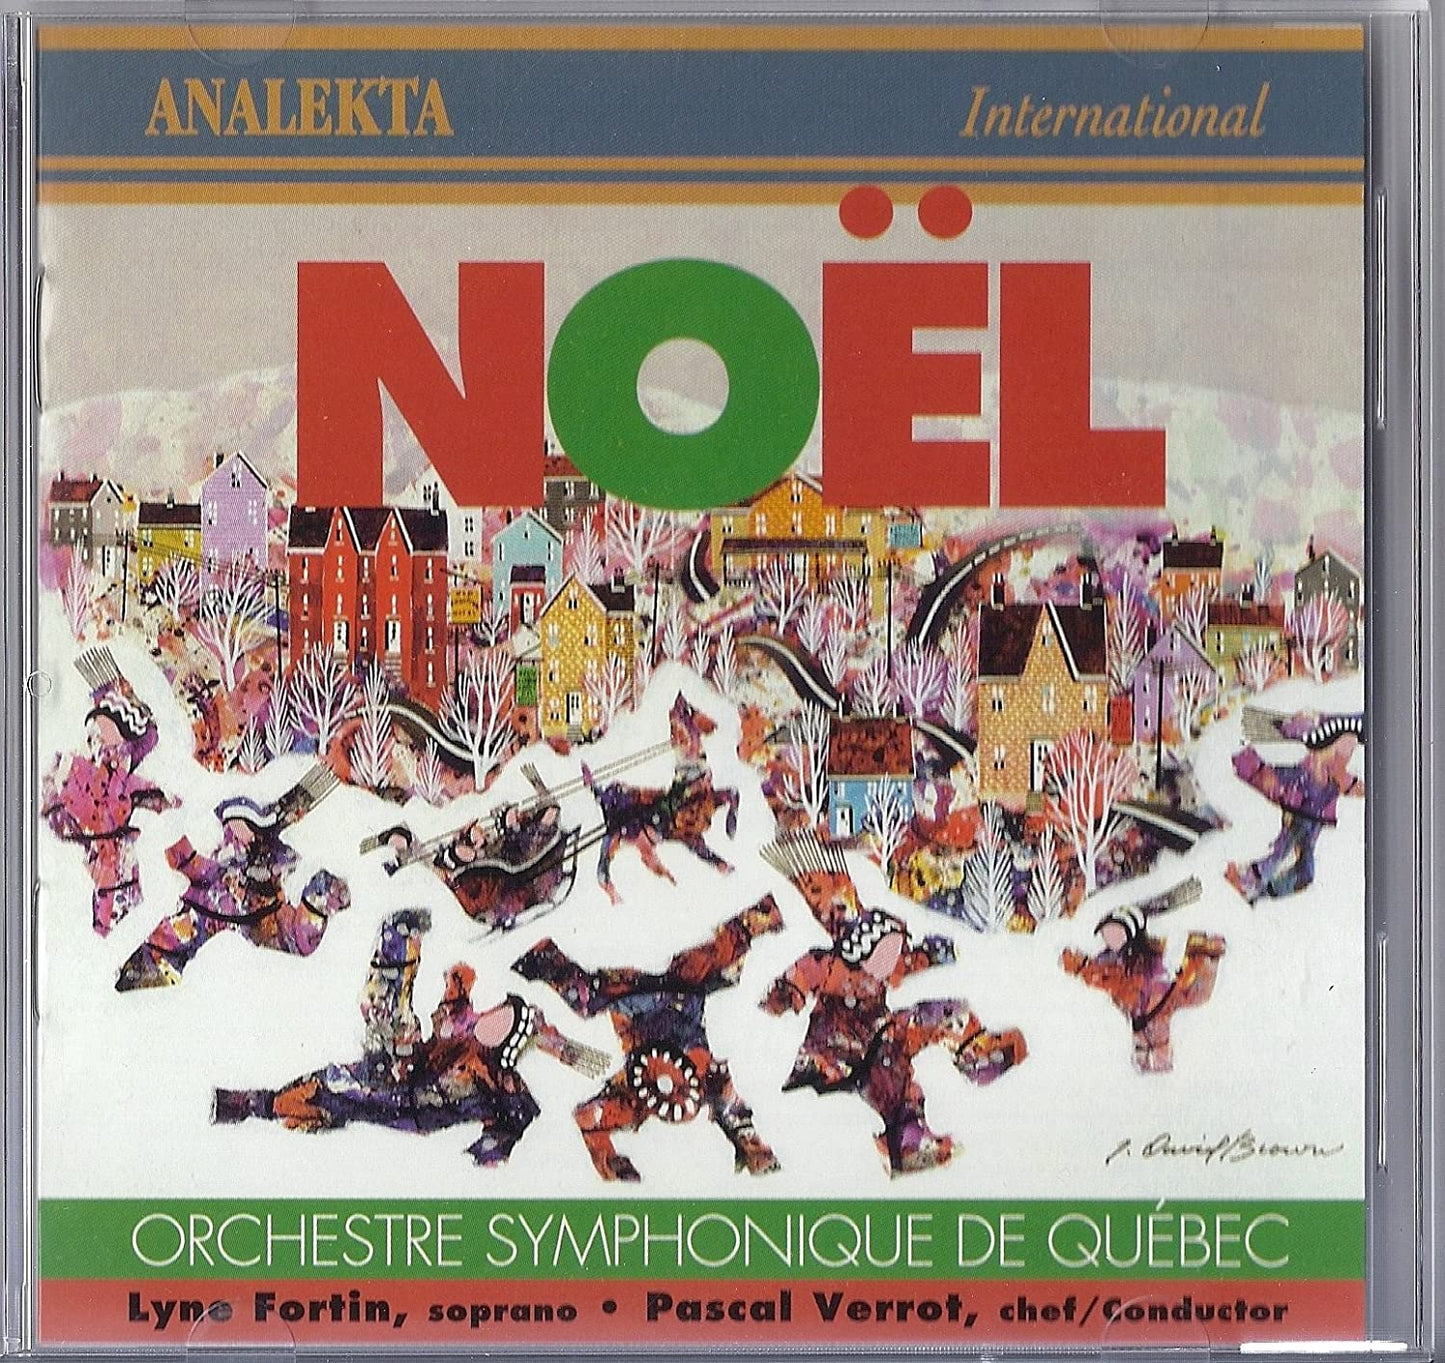 Noel: a Christmas Celebration [Audio CD] Various